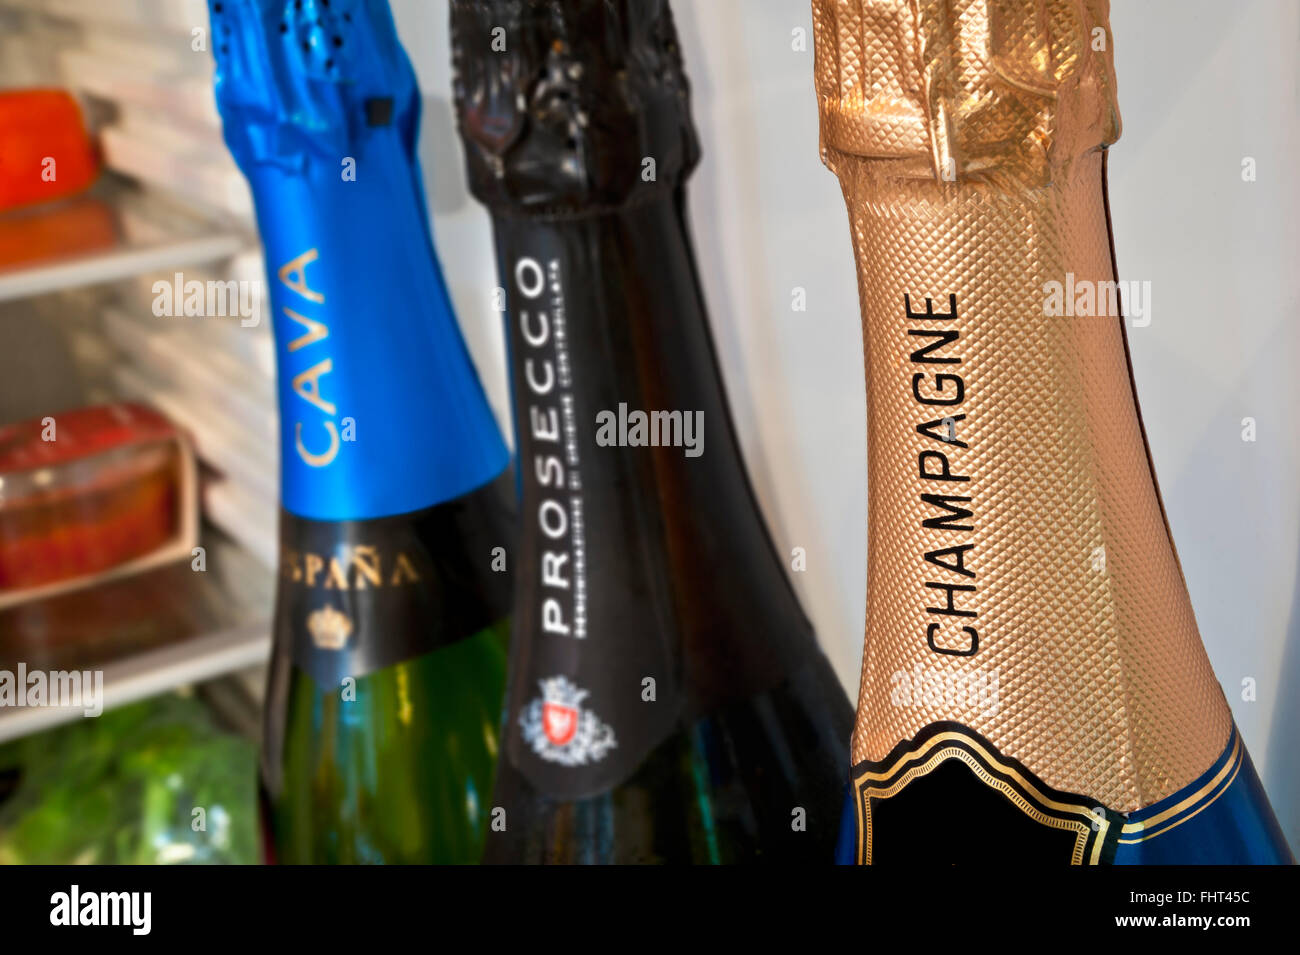 CHAMPAGNE PROSECCO CAVA Selection of chilled European sparkling wines in domestic refrigerator door Champagne in foreground Prosecco & Cava behind Stock Photo